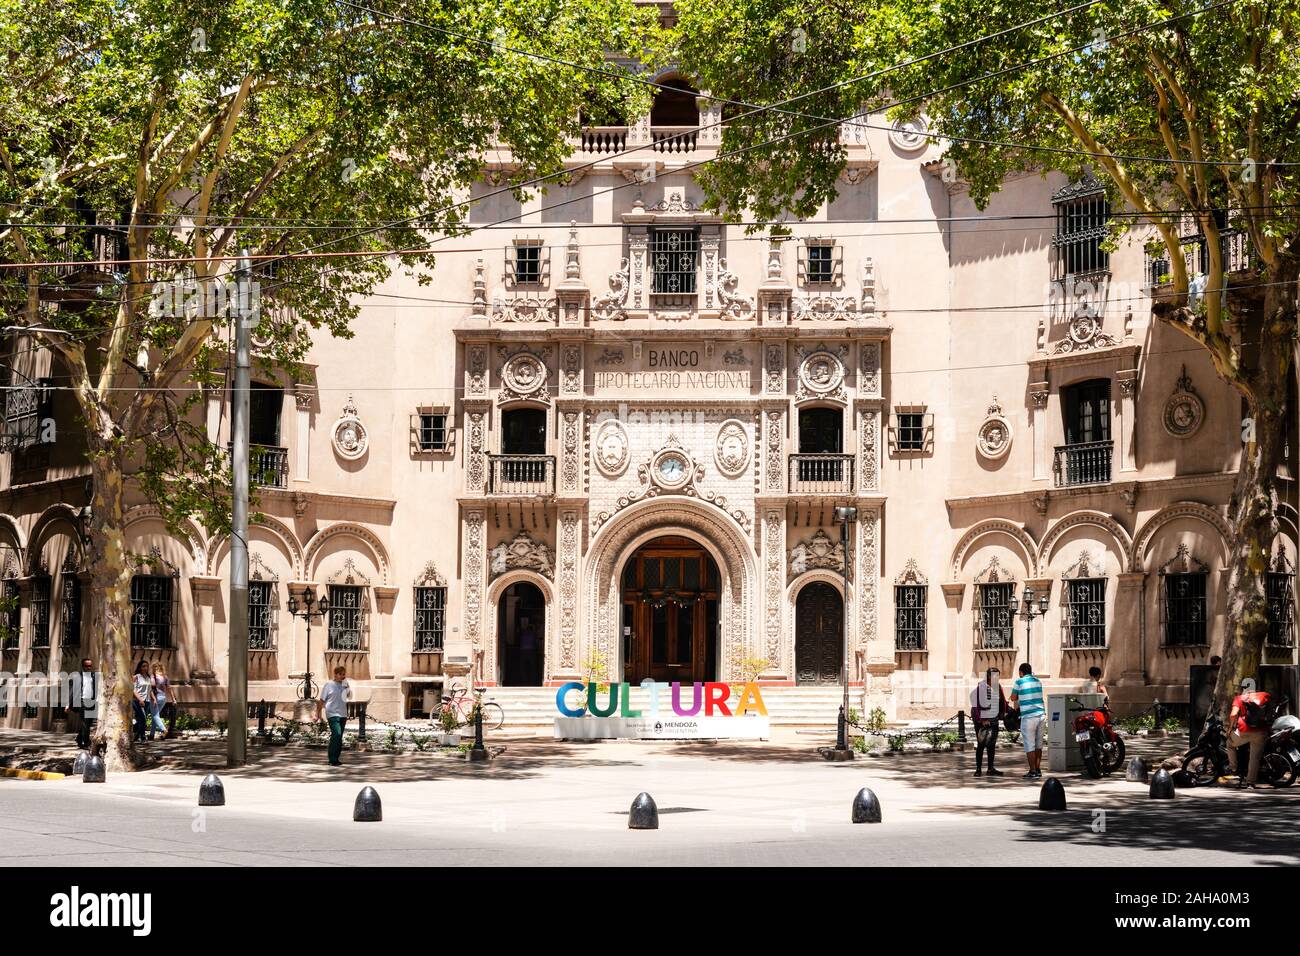 Banco Hipotecario Nacional, Avenida Gutierrez, Mendoza, Argentinien. Spanische Renaissance-Architektur. Stockfoto